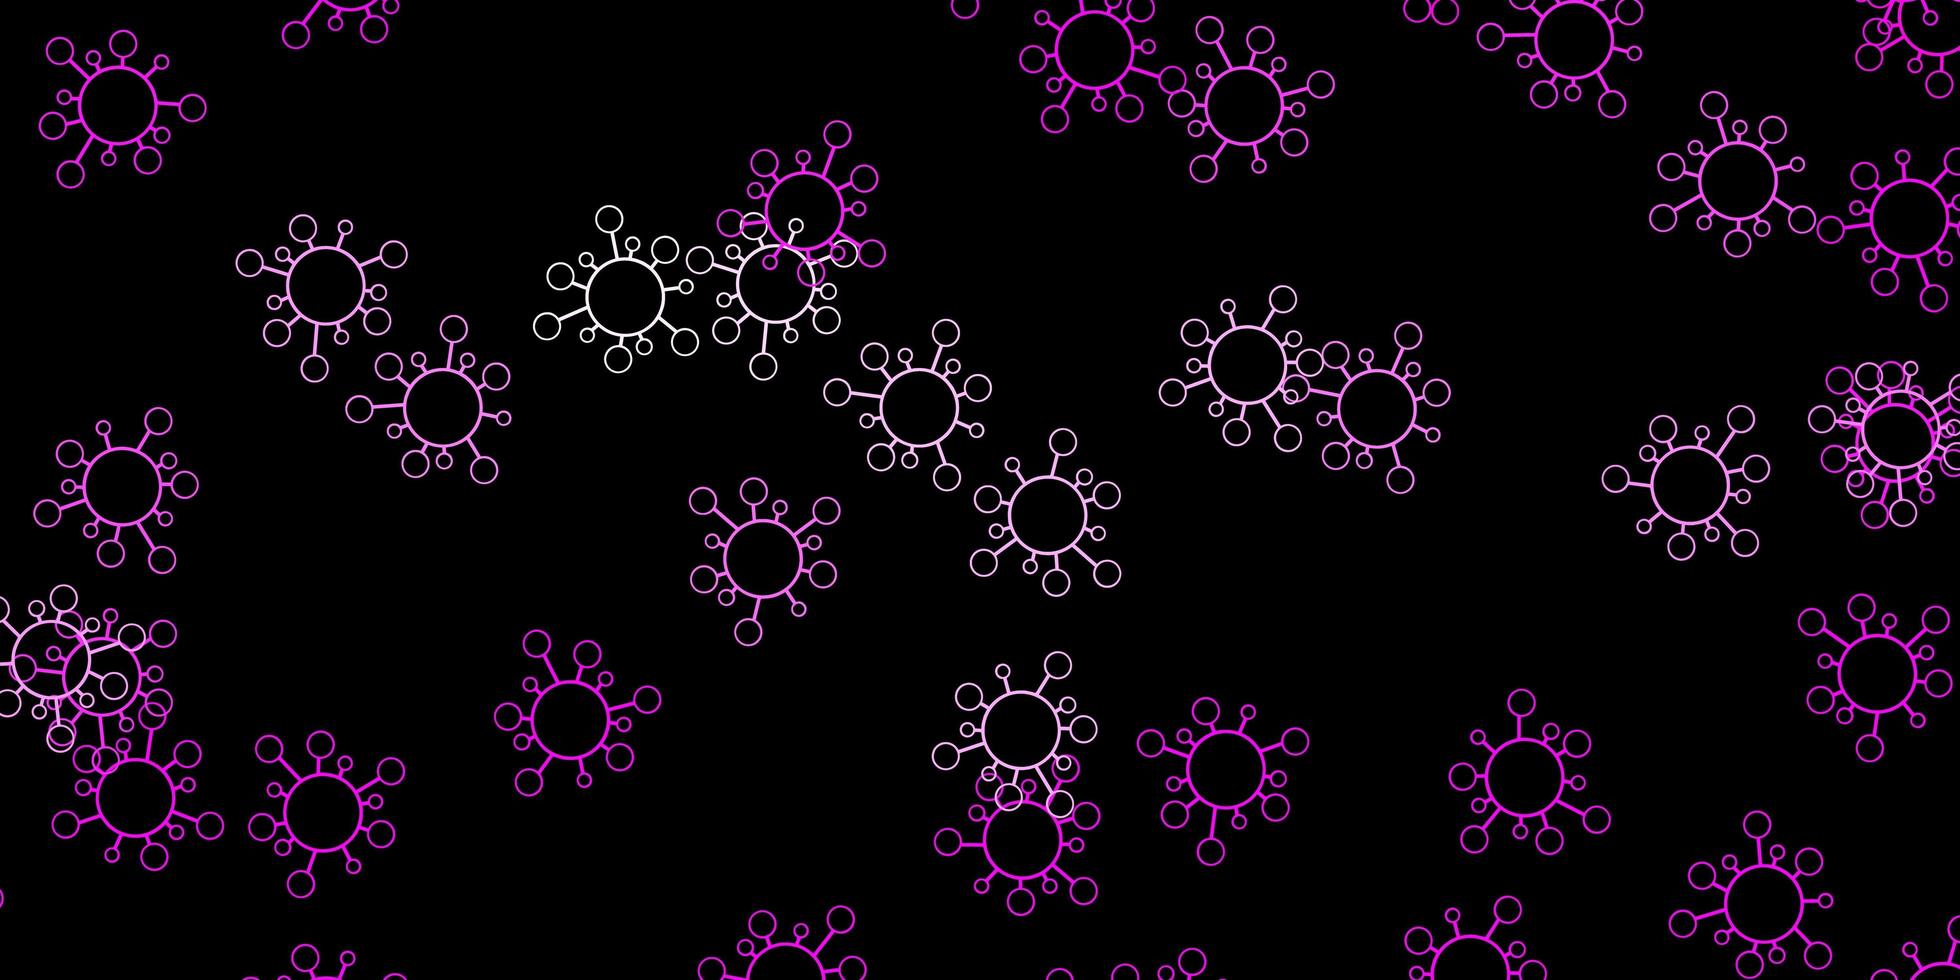 Dark pink vector pattern with coronavirus elements